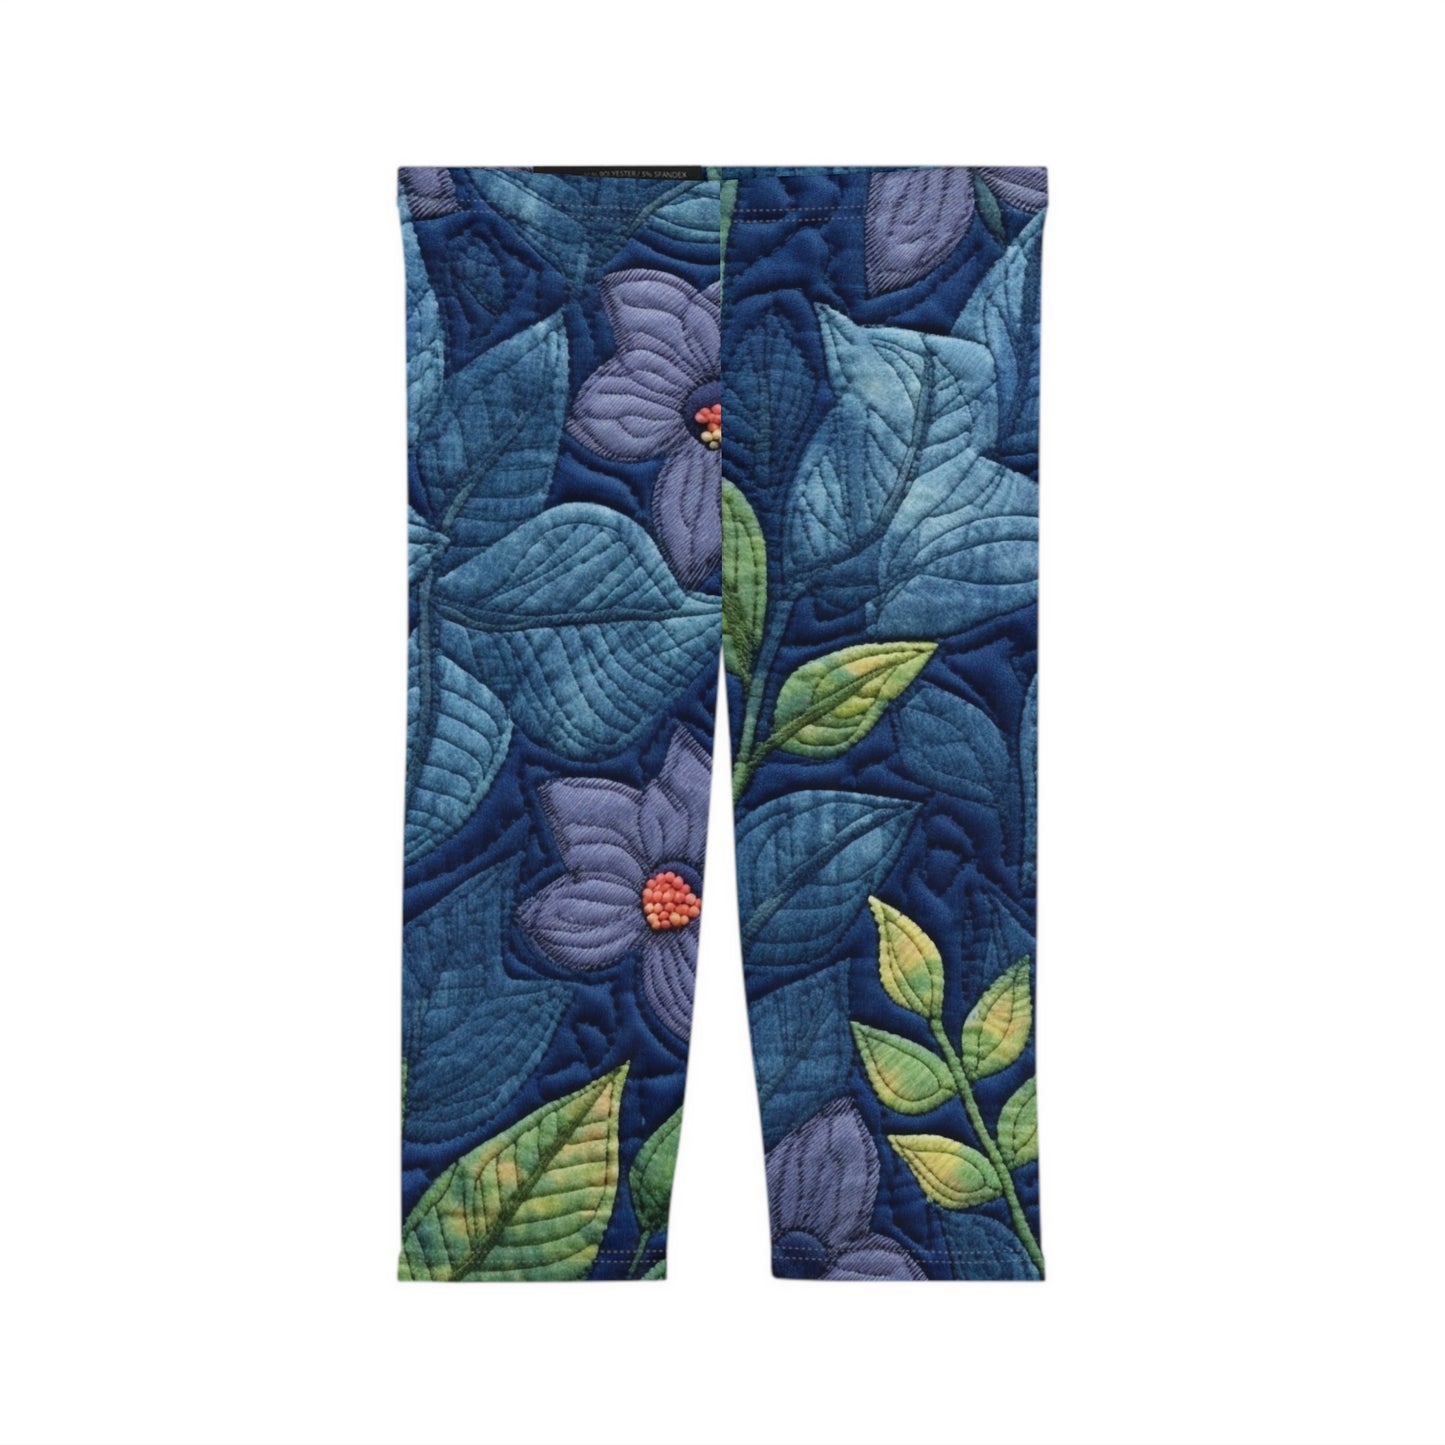 Floral Embroidery Blue: Denim-Inspired, Artisan-Crafted Flower Design - Women’s Capri Leggings (AOP)